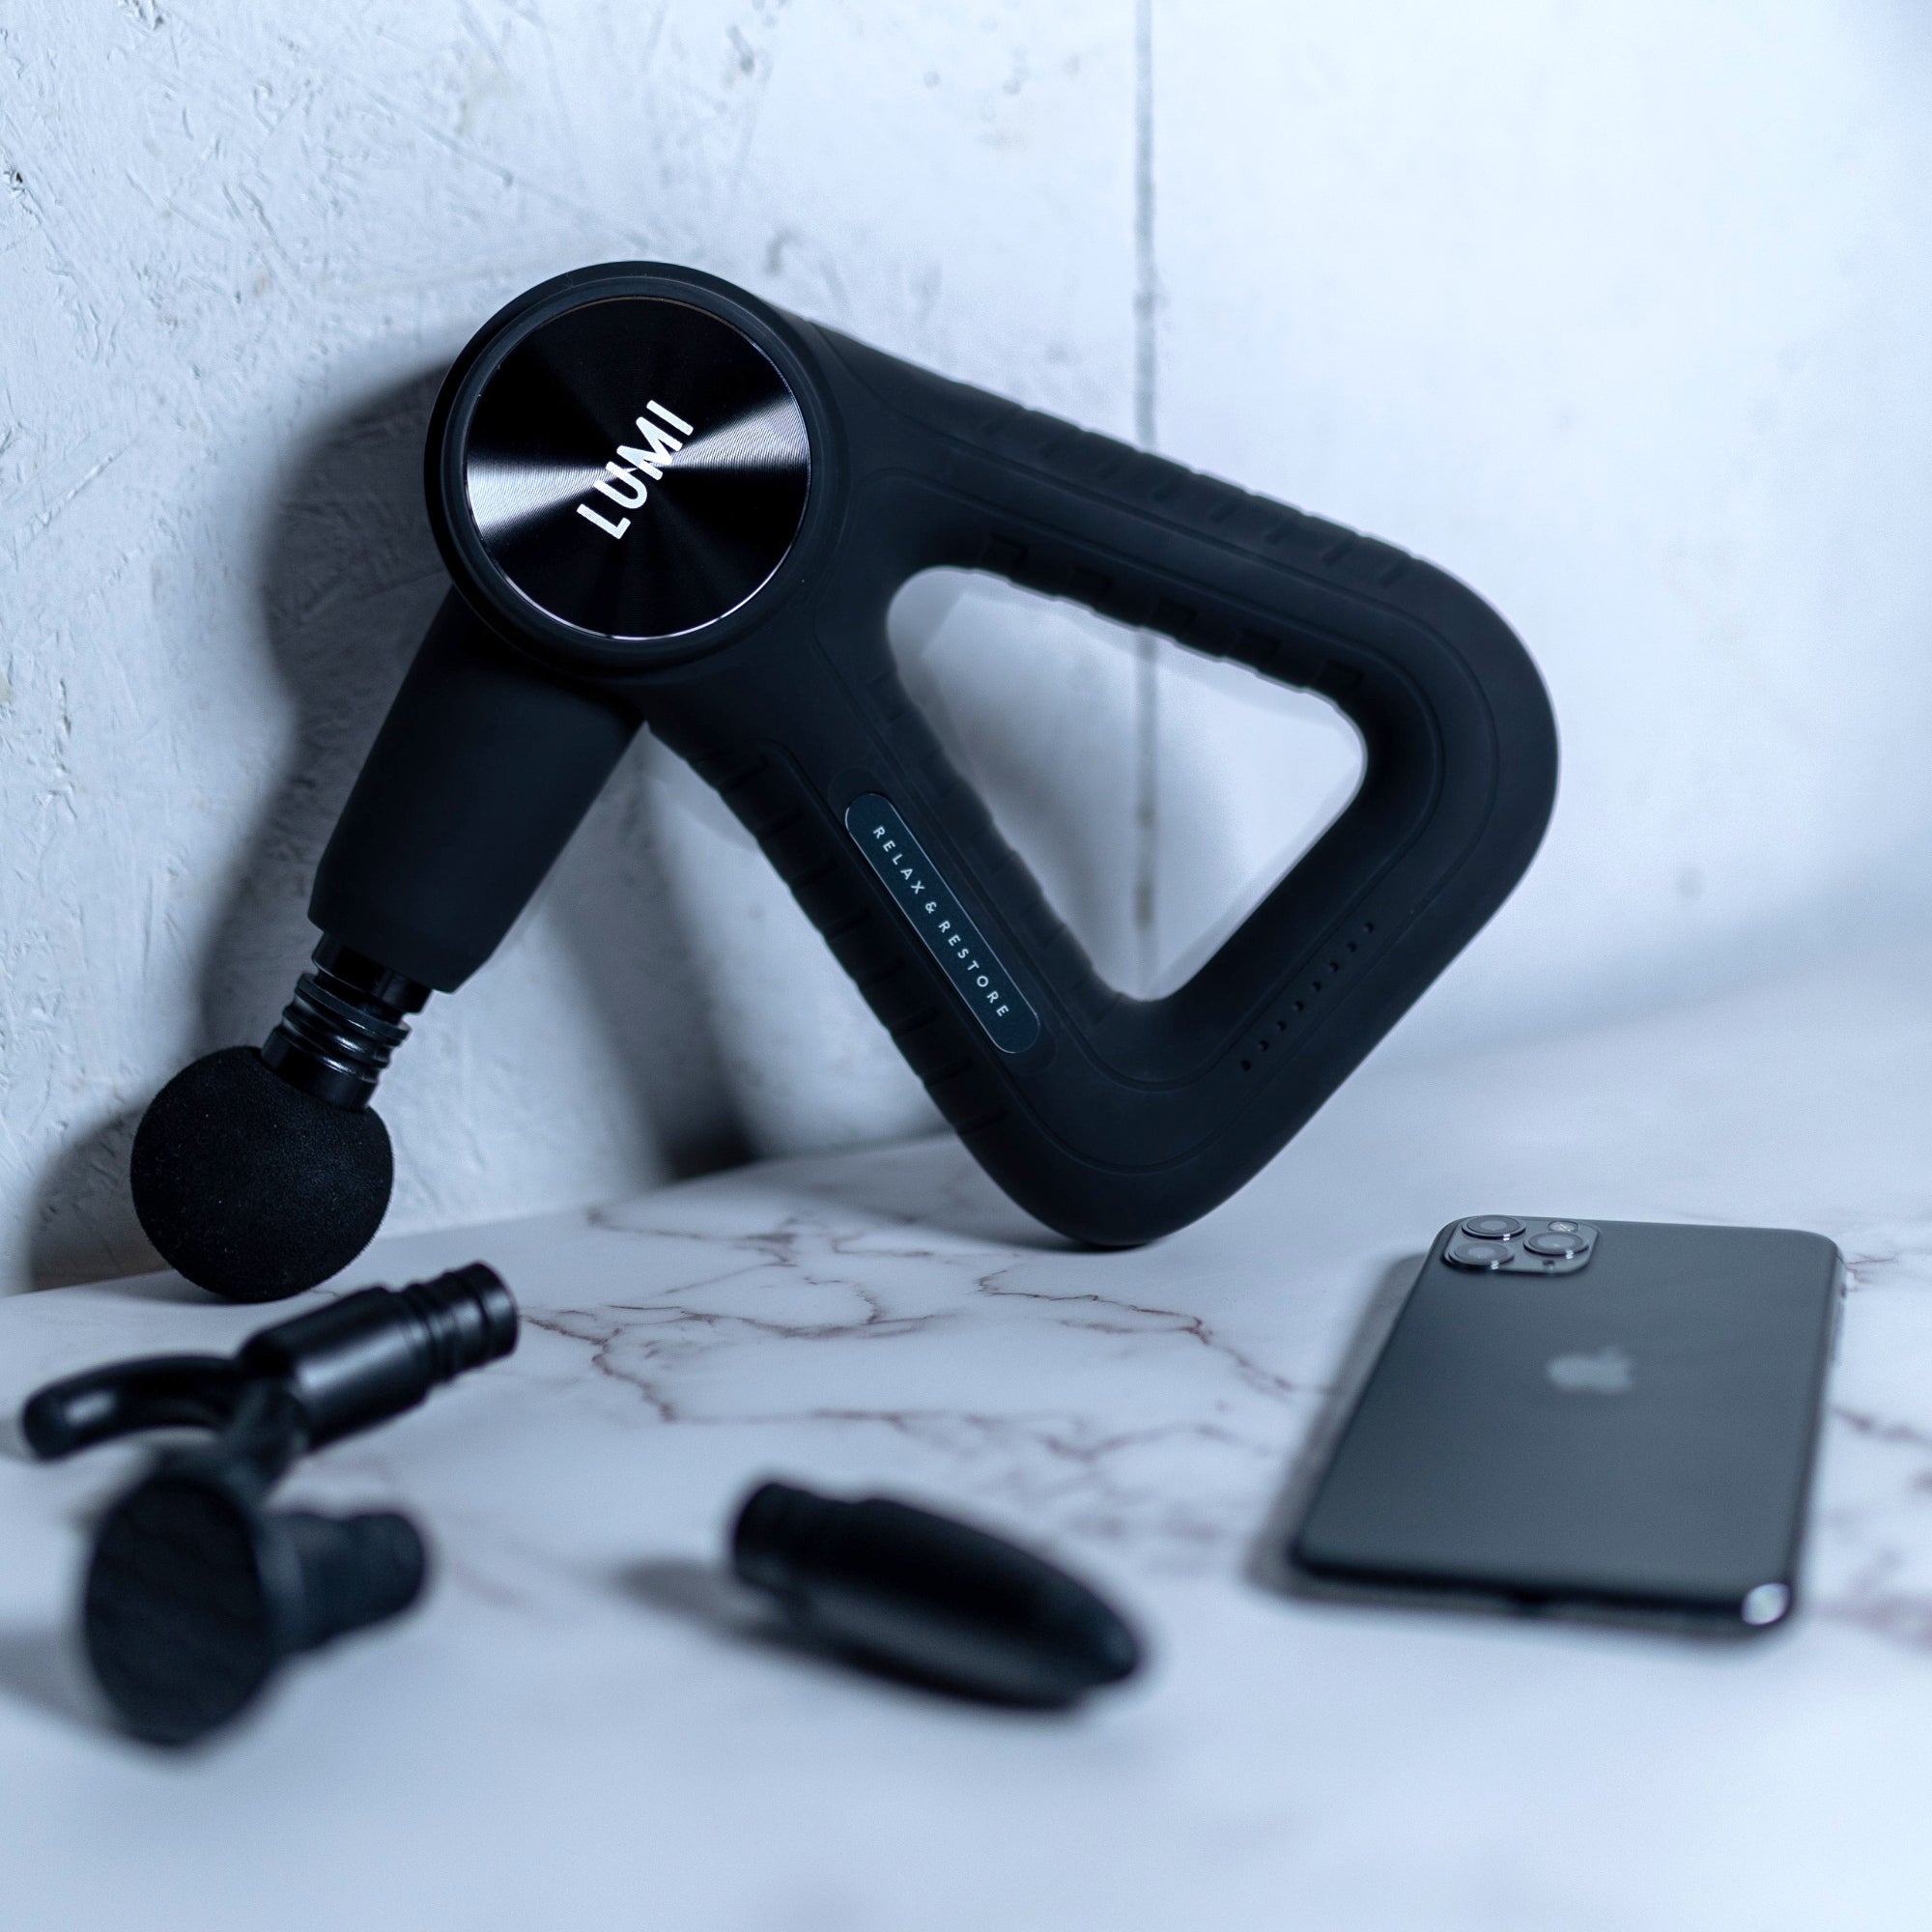 Lumi powerPro Massage Gun with attachments and iPhone